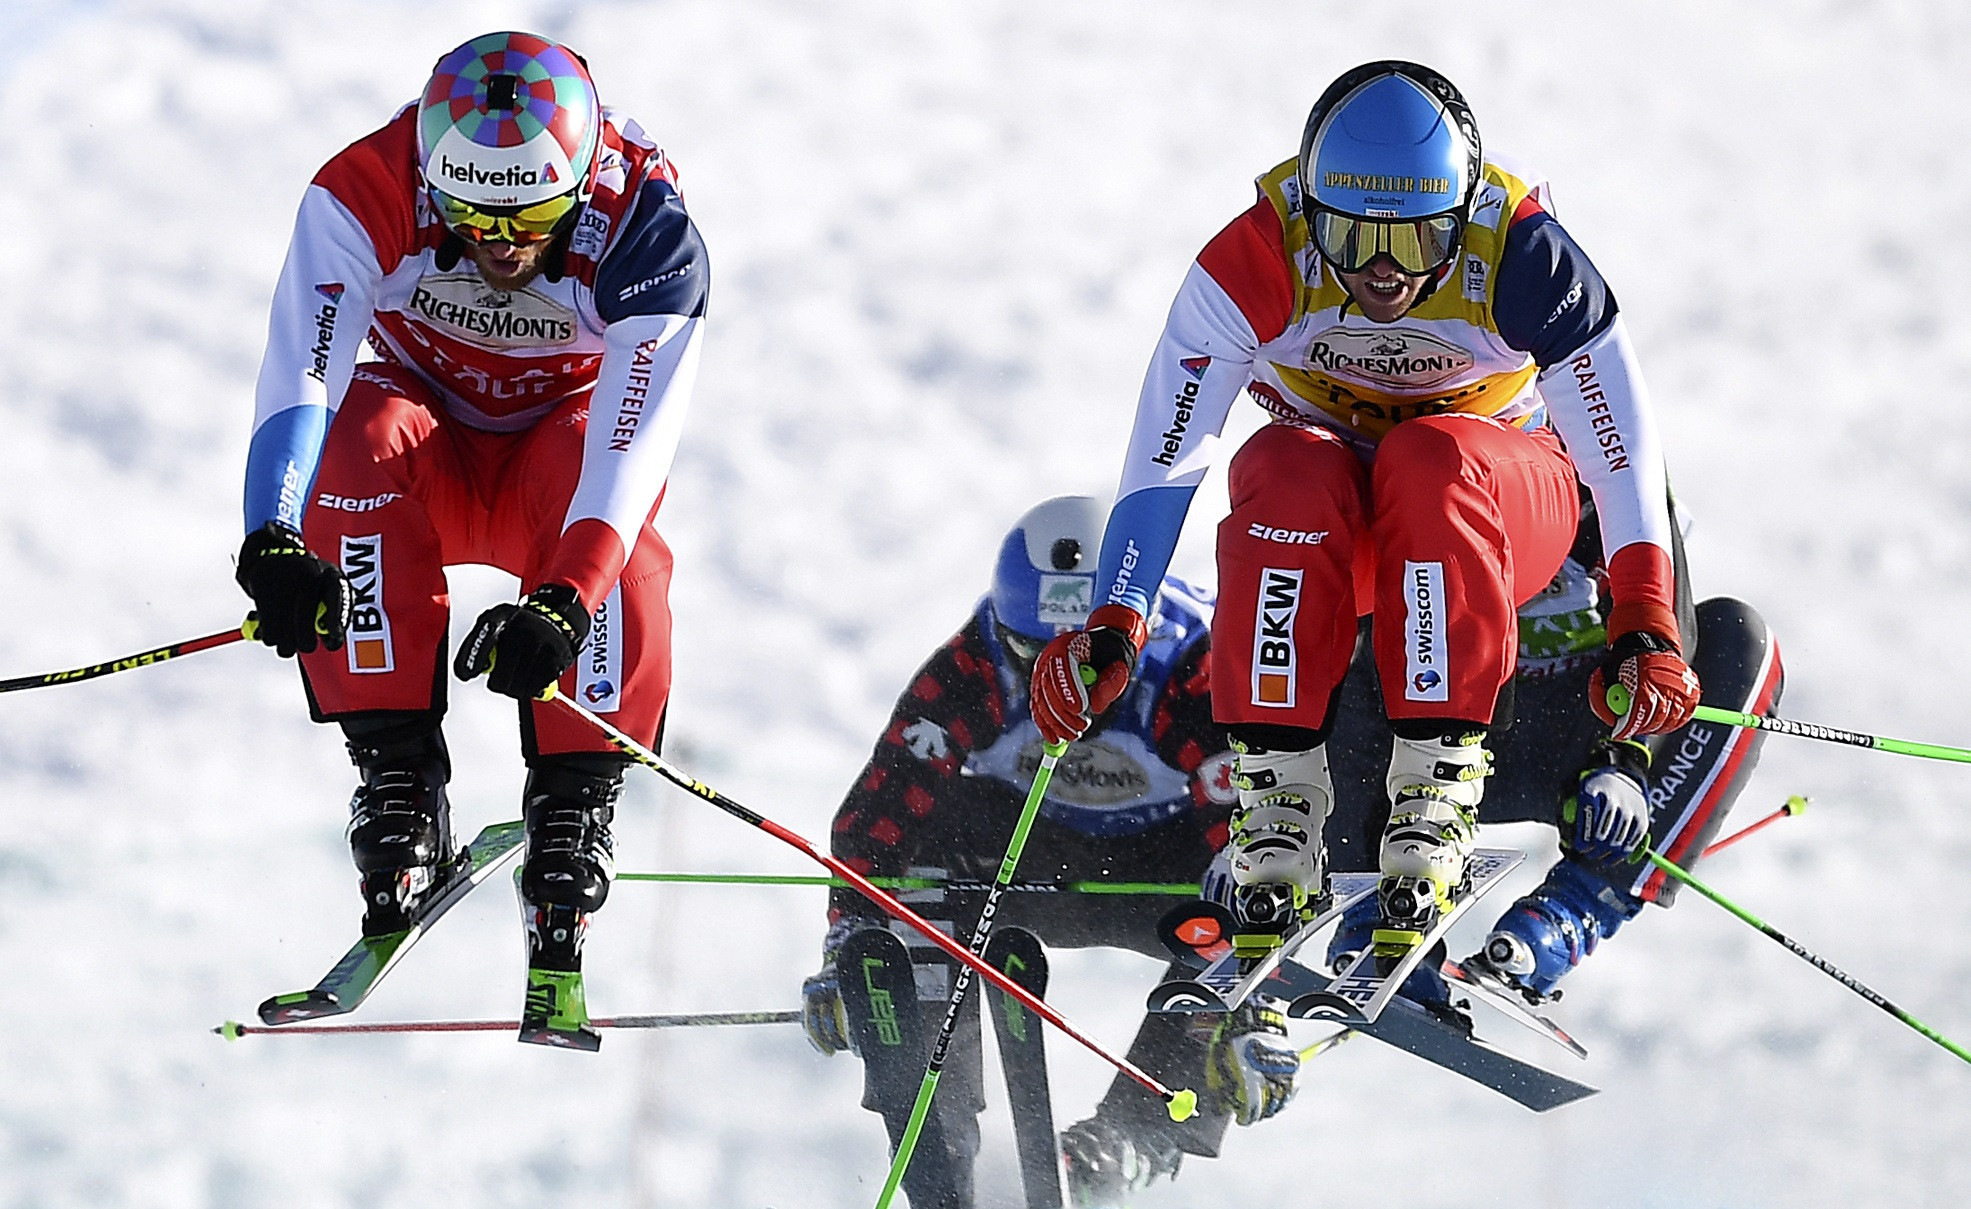 FIS Ski Cross World Cup set to resume in Idre Fjäll